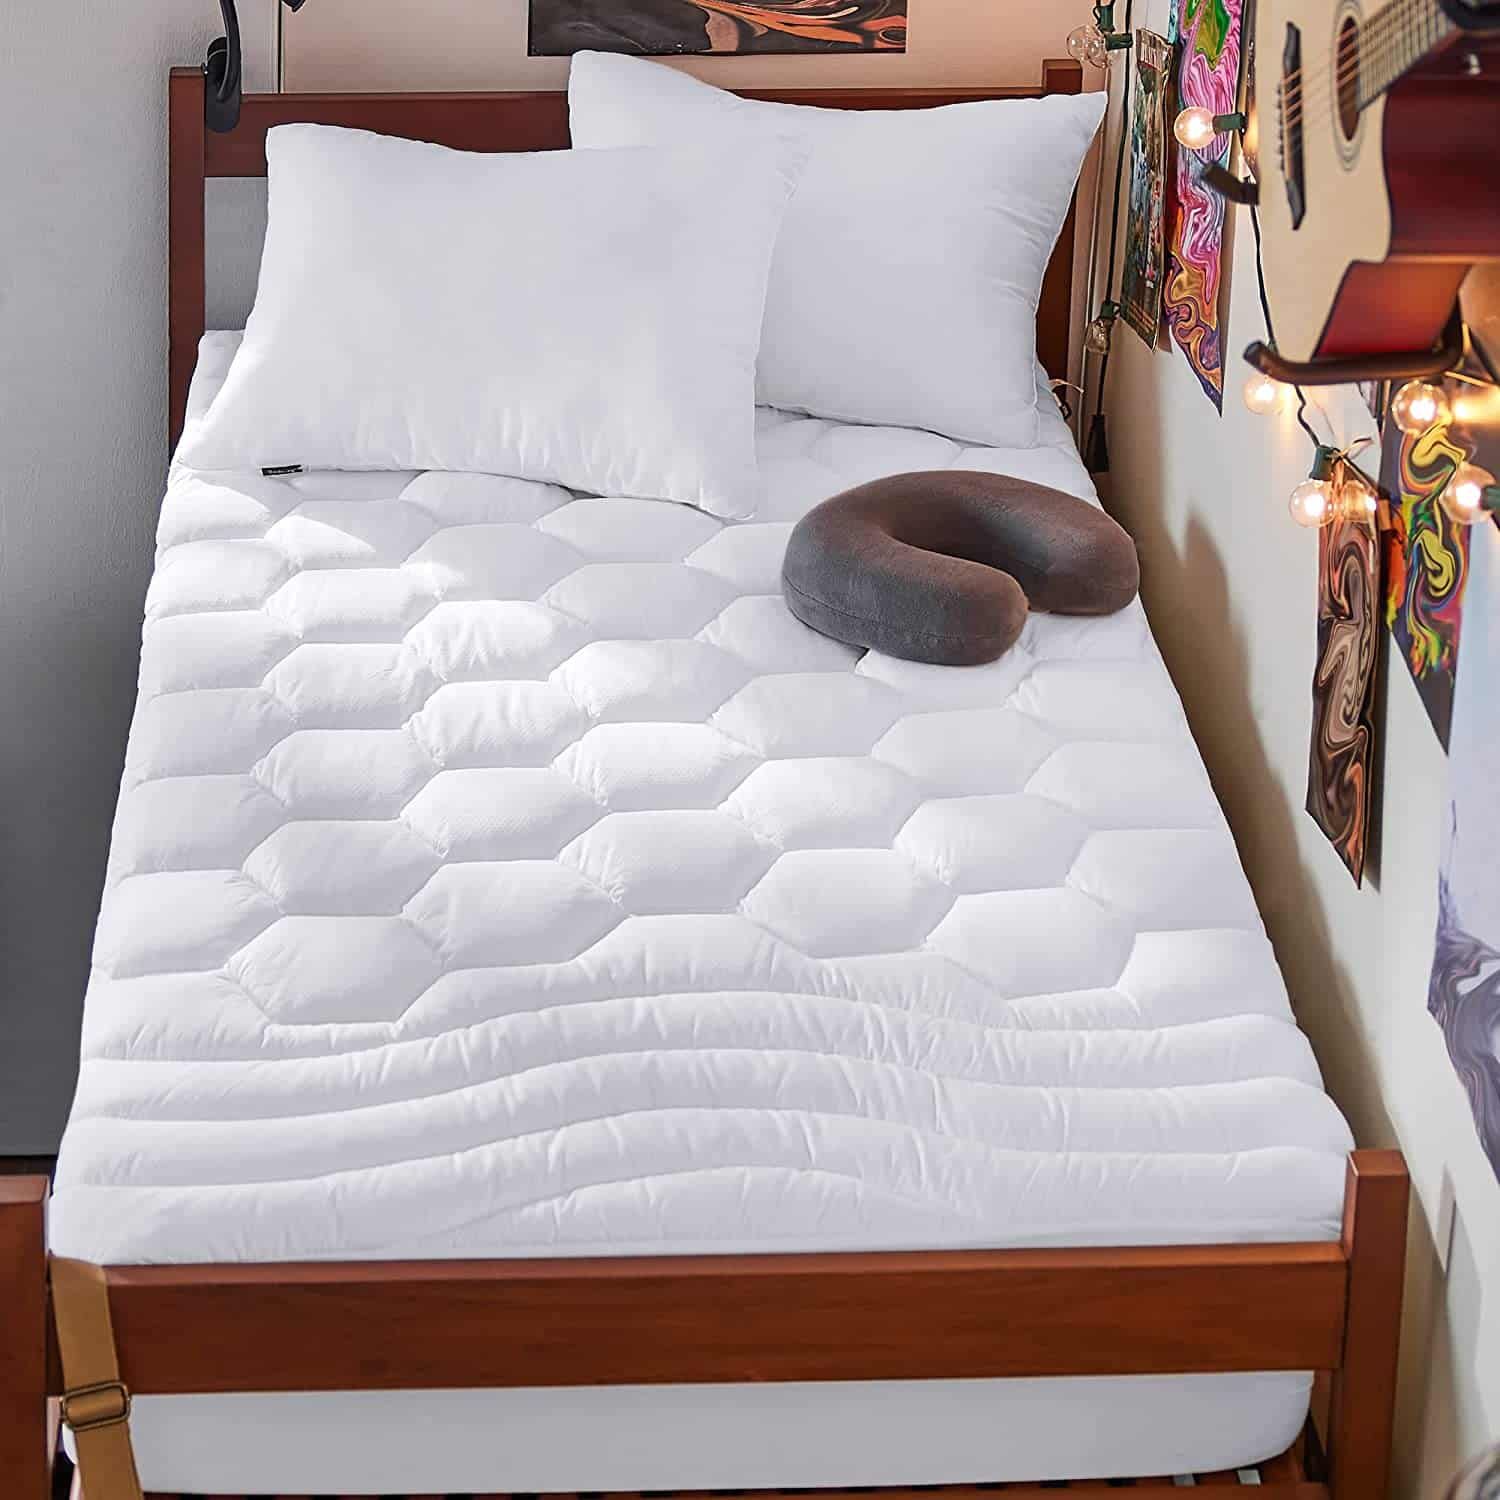 dorm room bedding: mattress topper